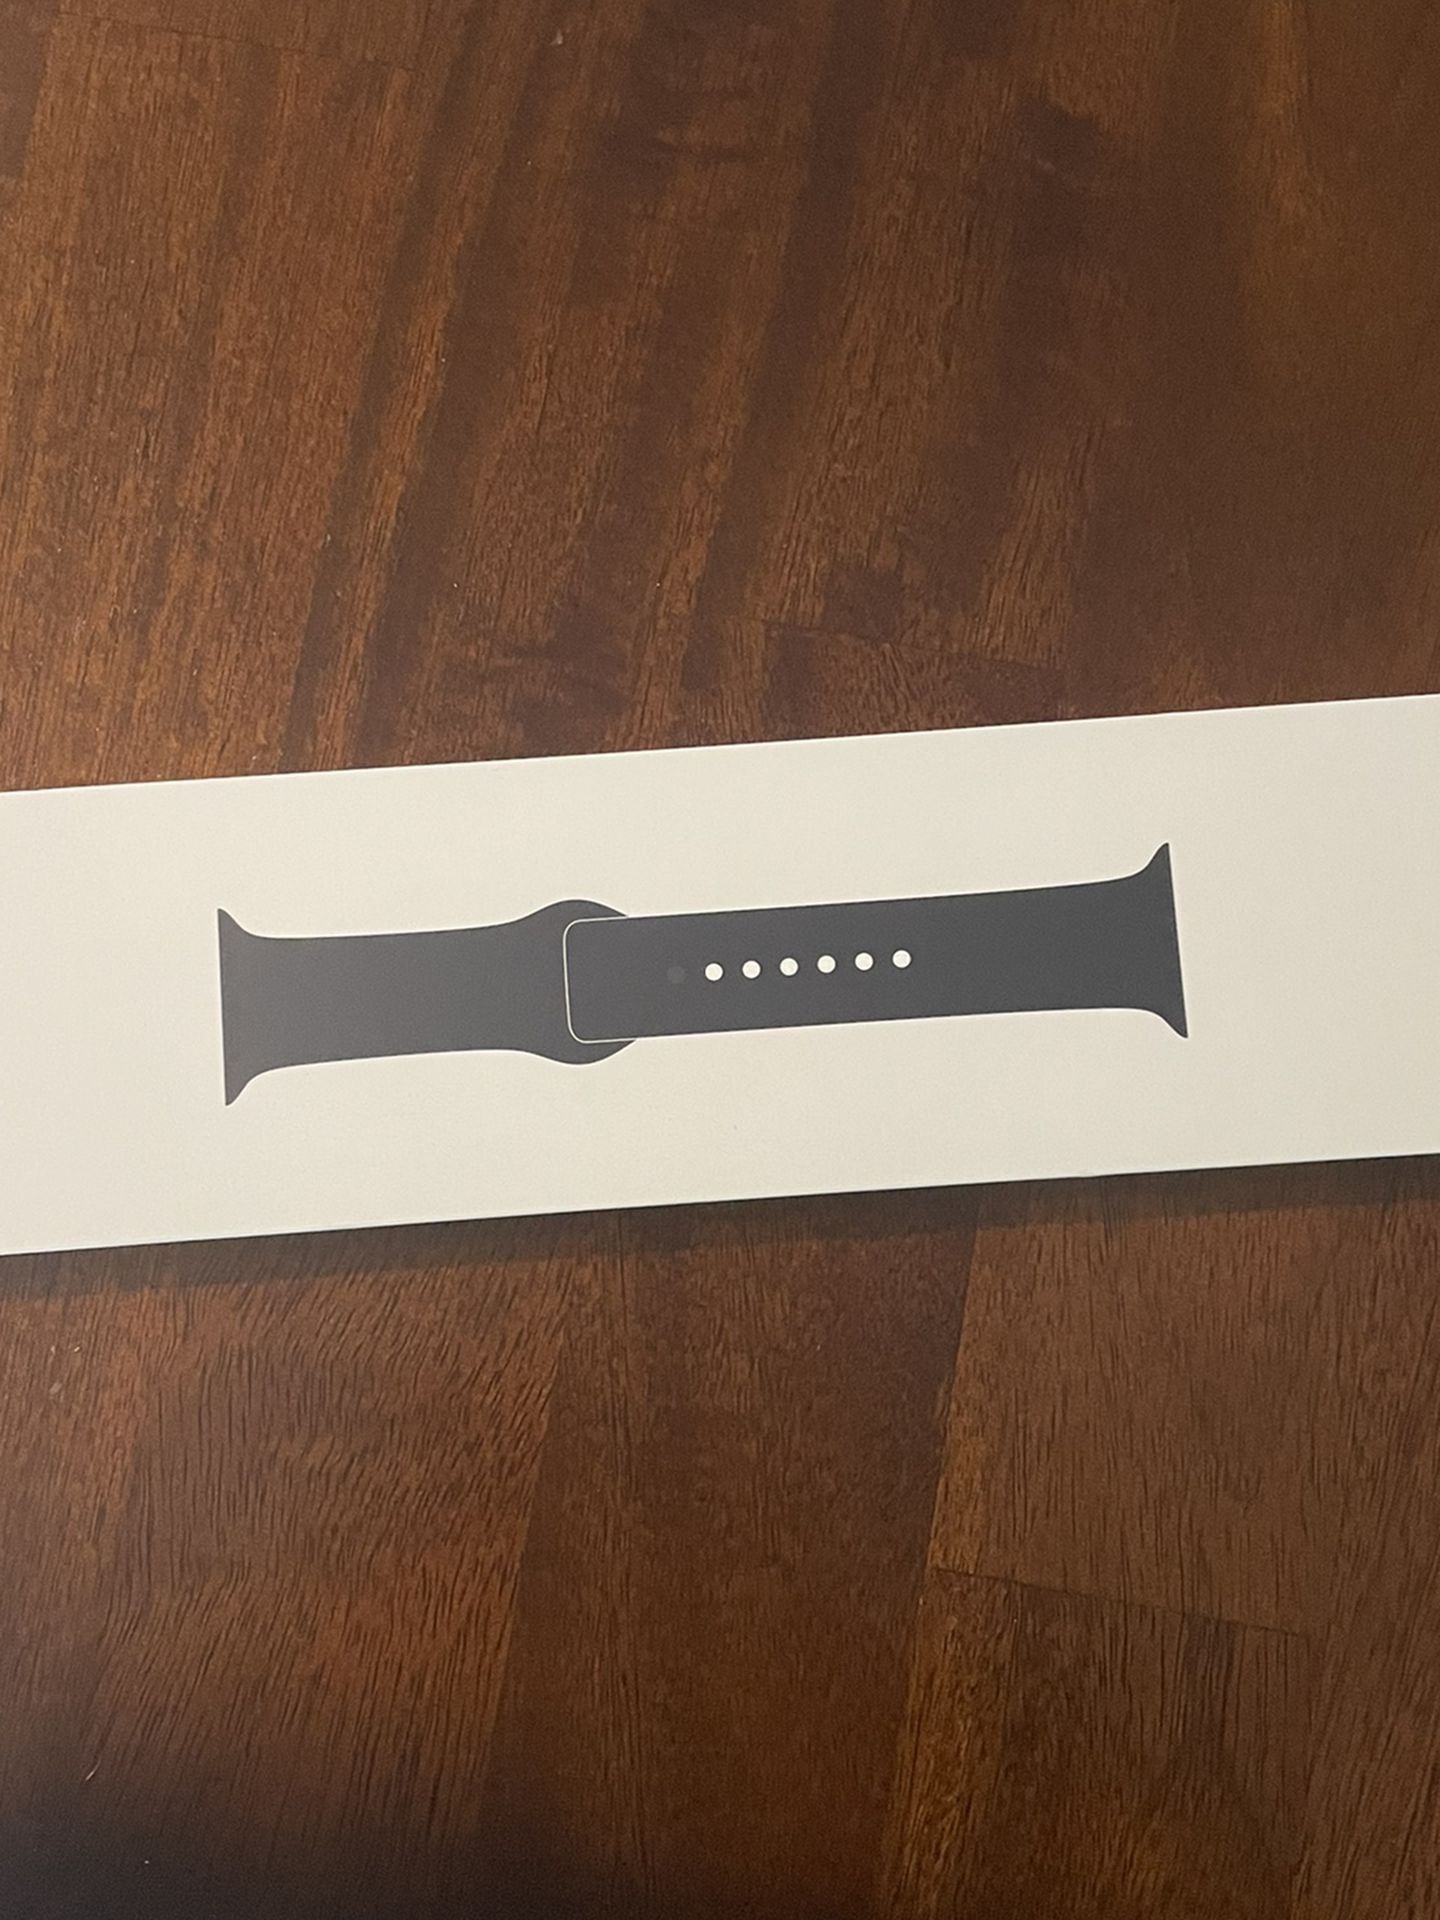 Brand New 44 Apple Watch Band Still Sealed